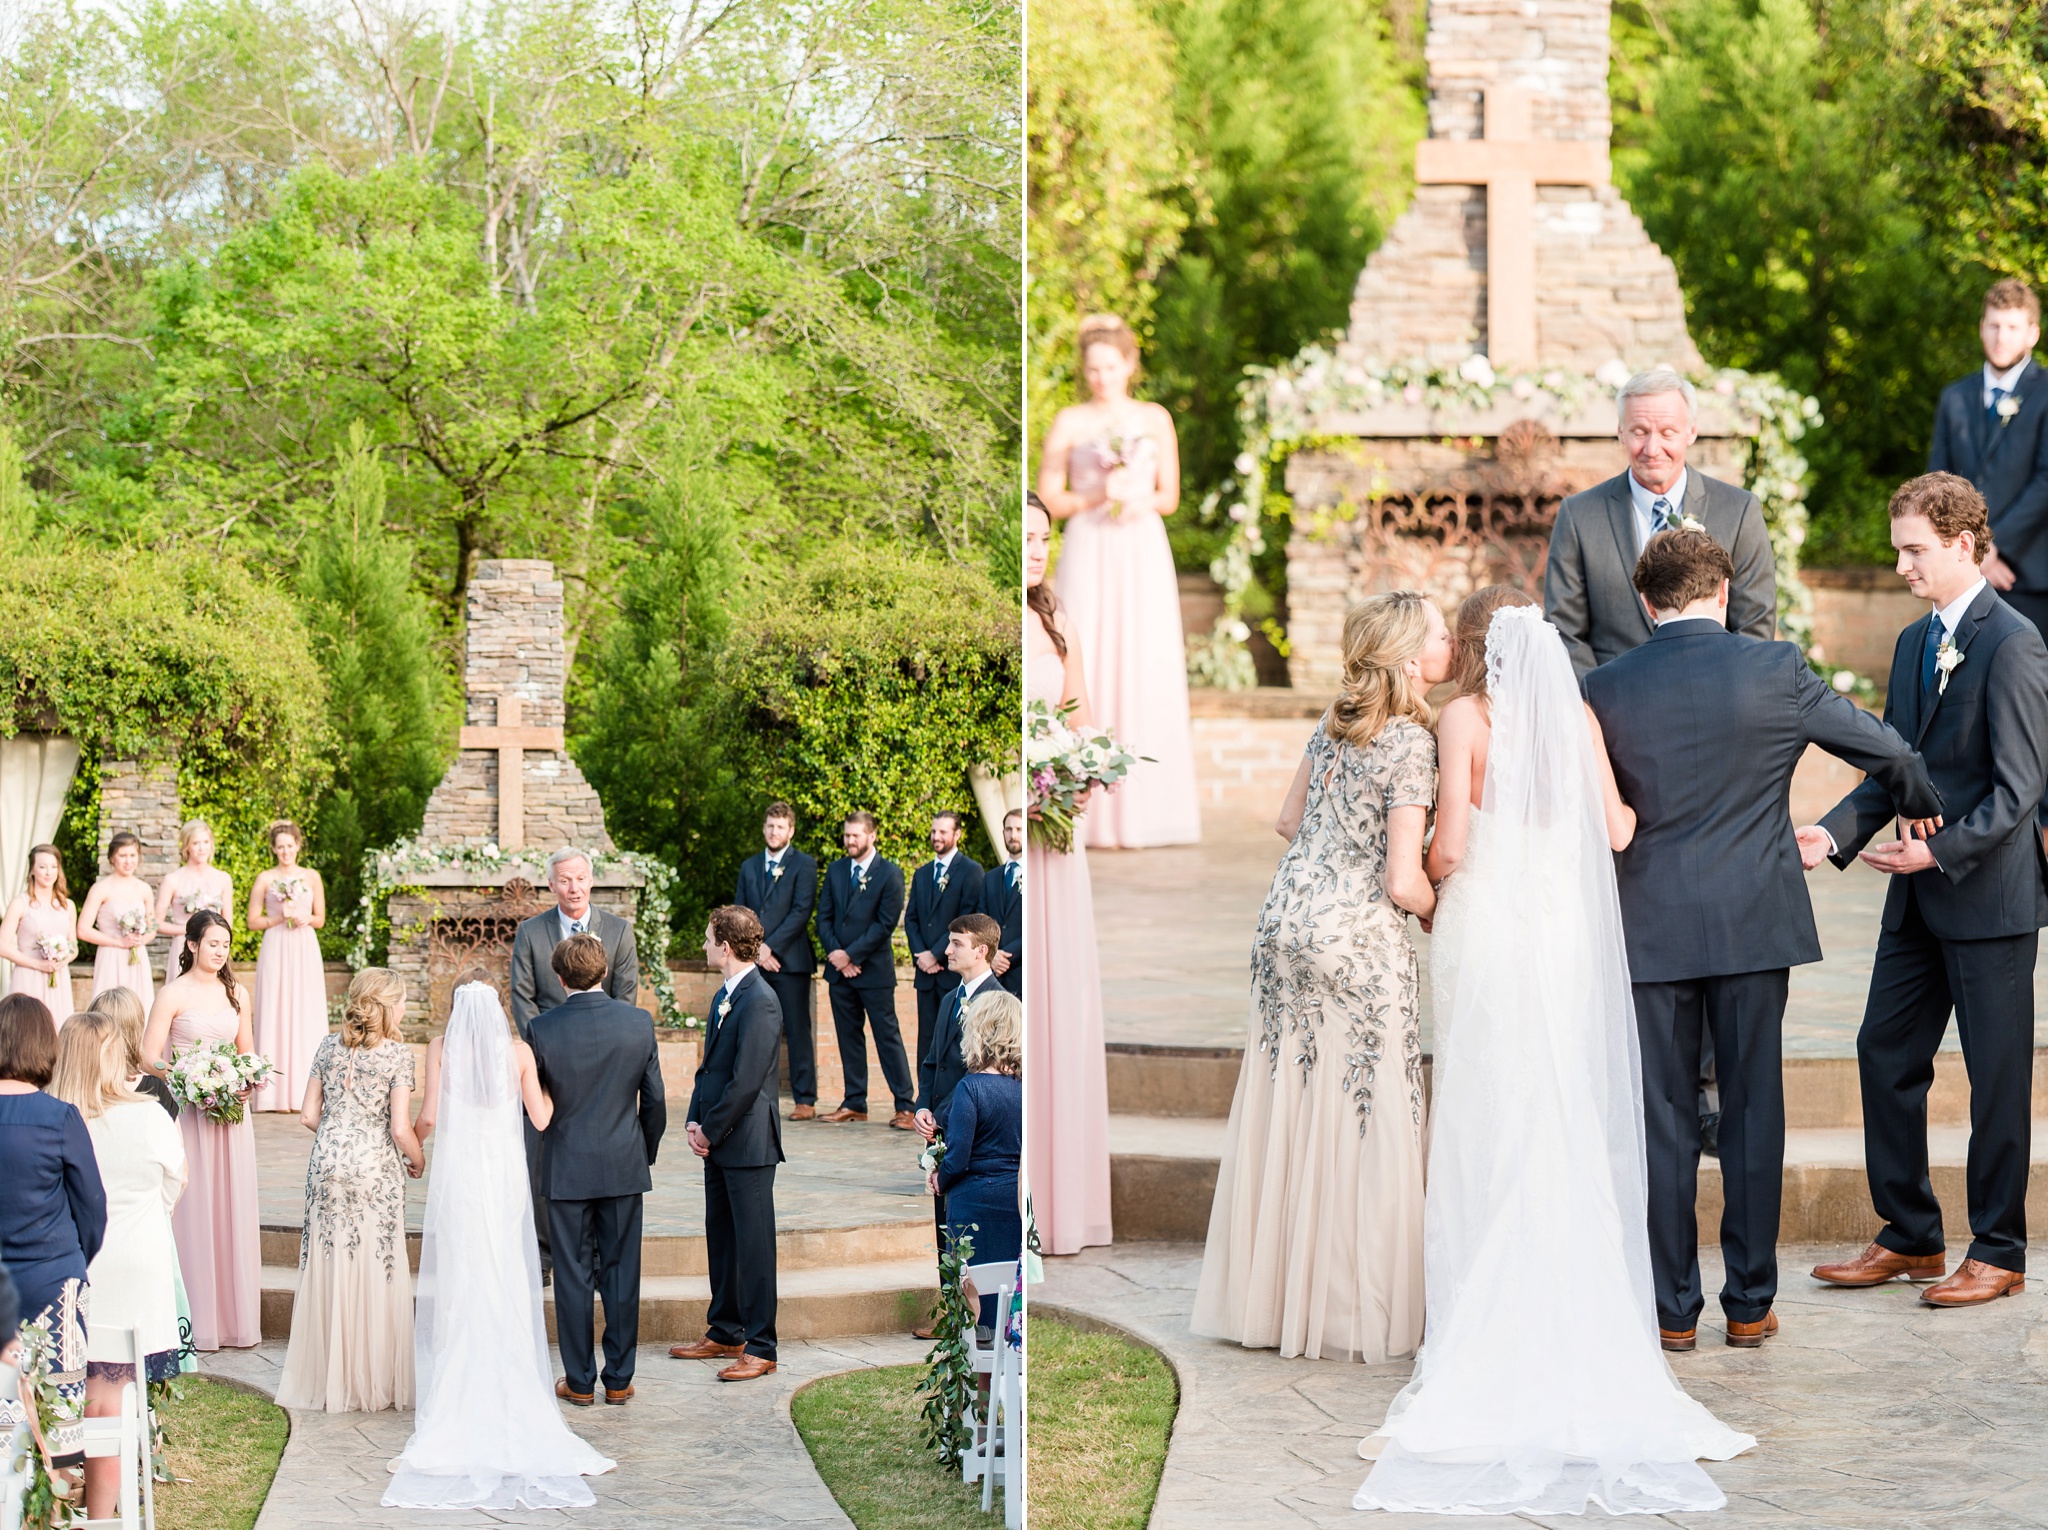 Sonnet House Blush and Gold Spring Wedding | Birmingham Alabama Wedding Photographers_0063.jpg